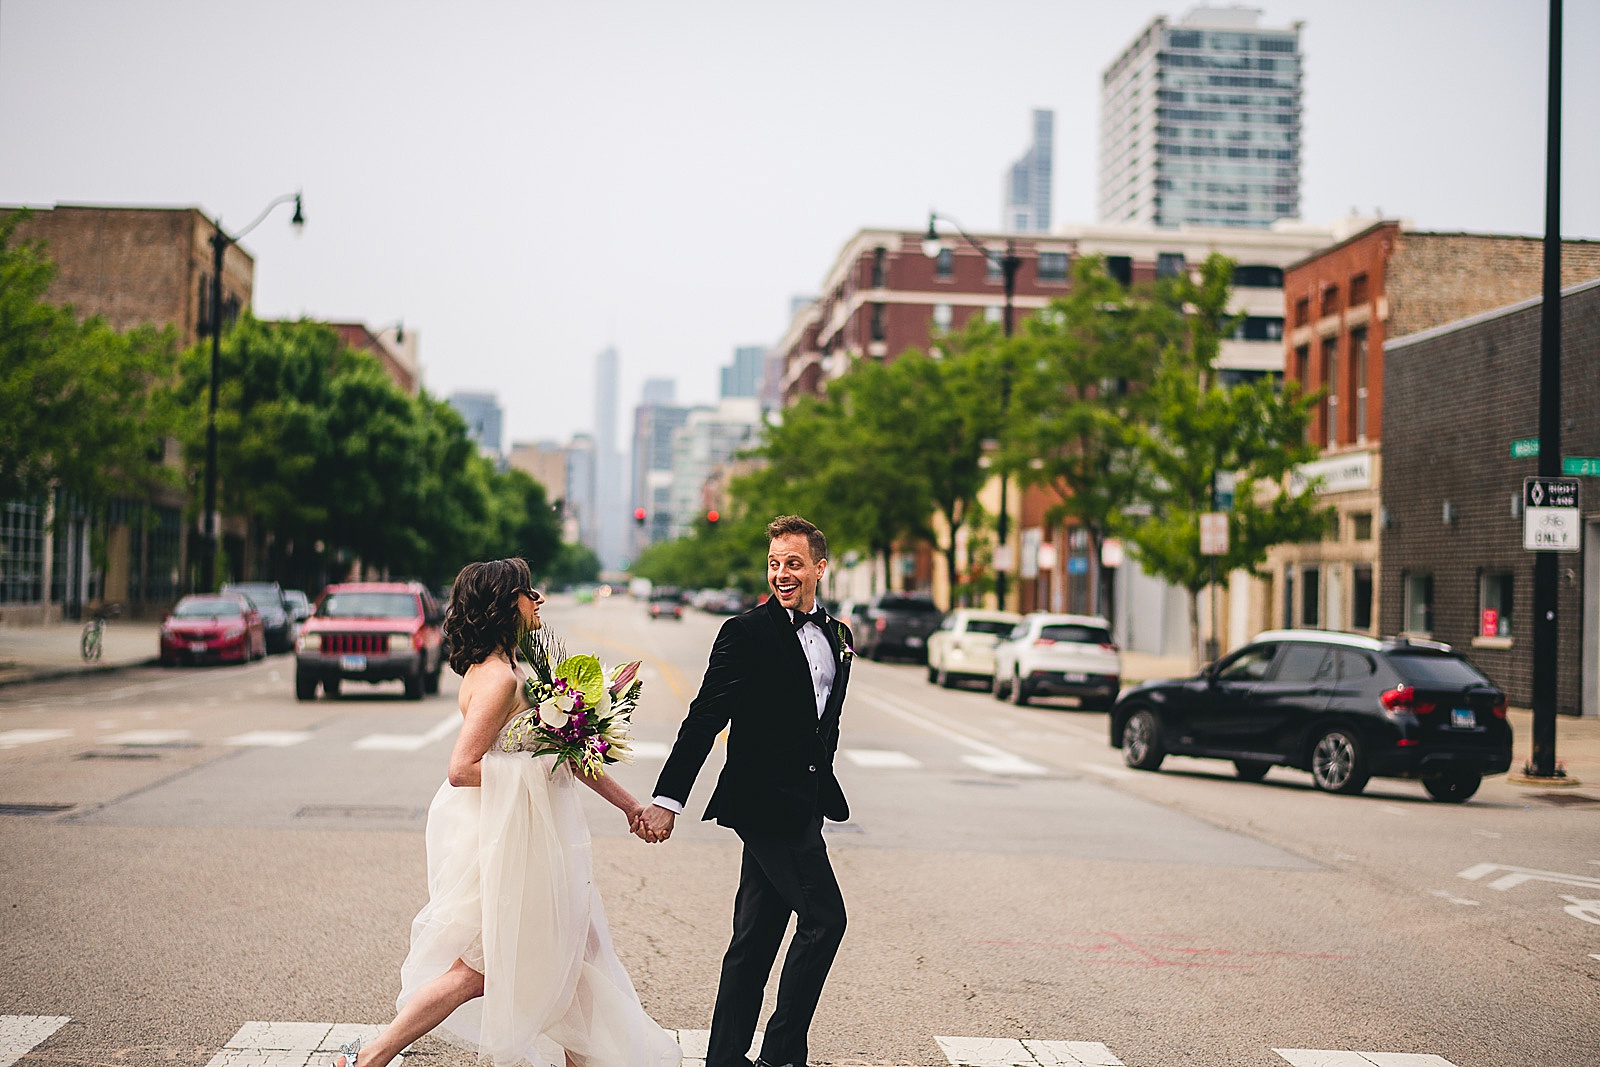 22 fun wedding photos in chicago by peter gubernat - Chicago Illuminating Company Wedding // Samantha + Jeremy